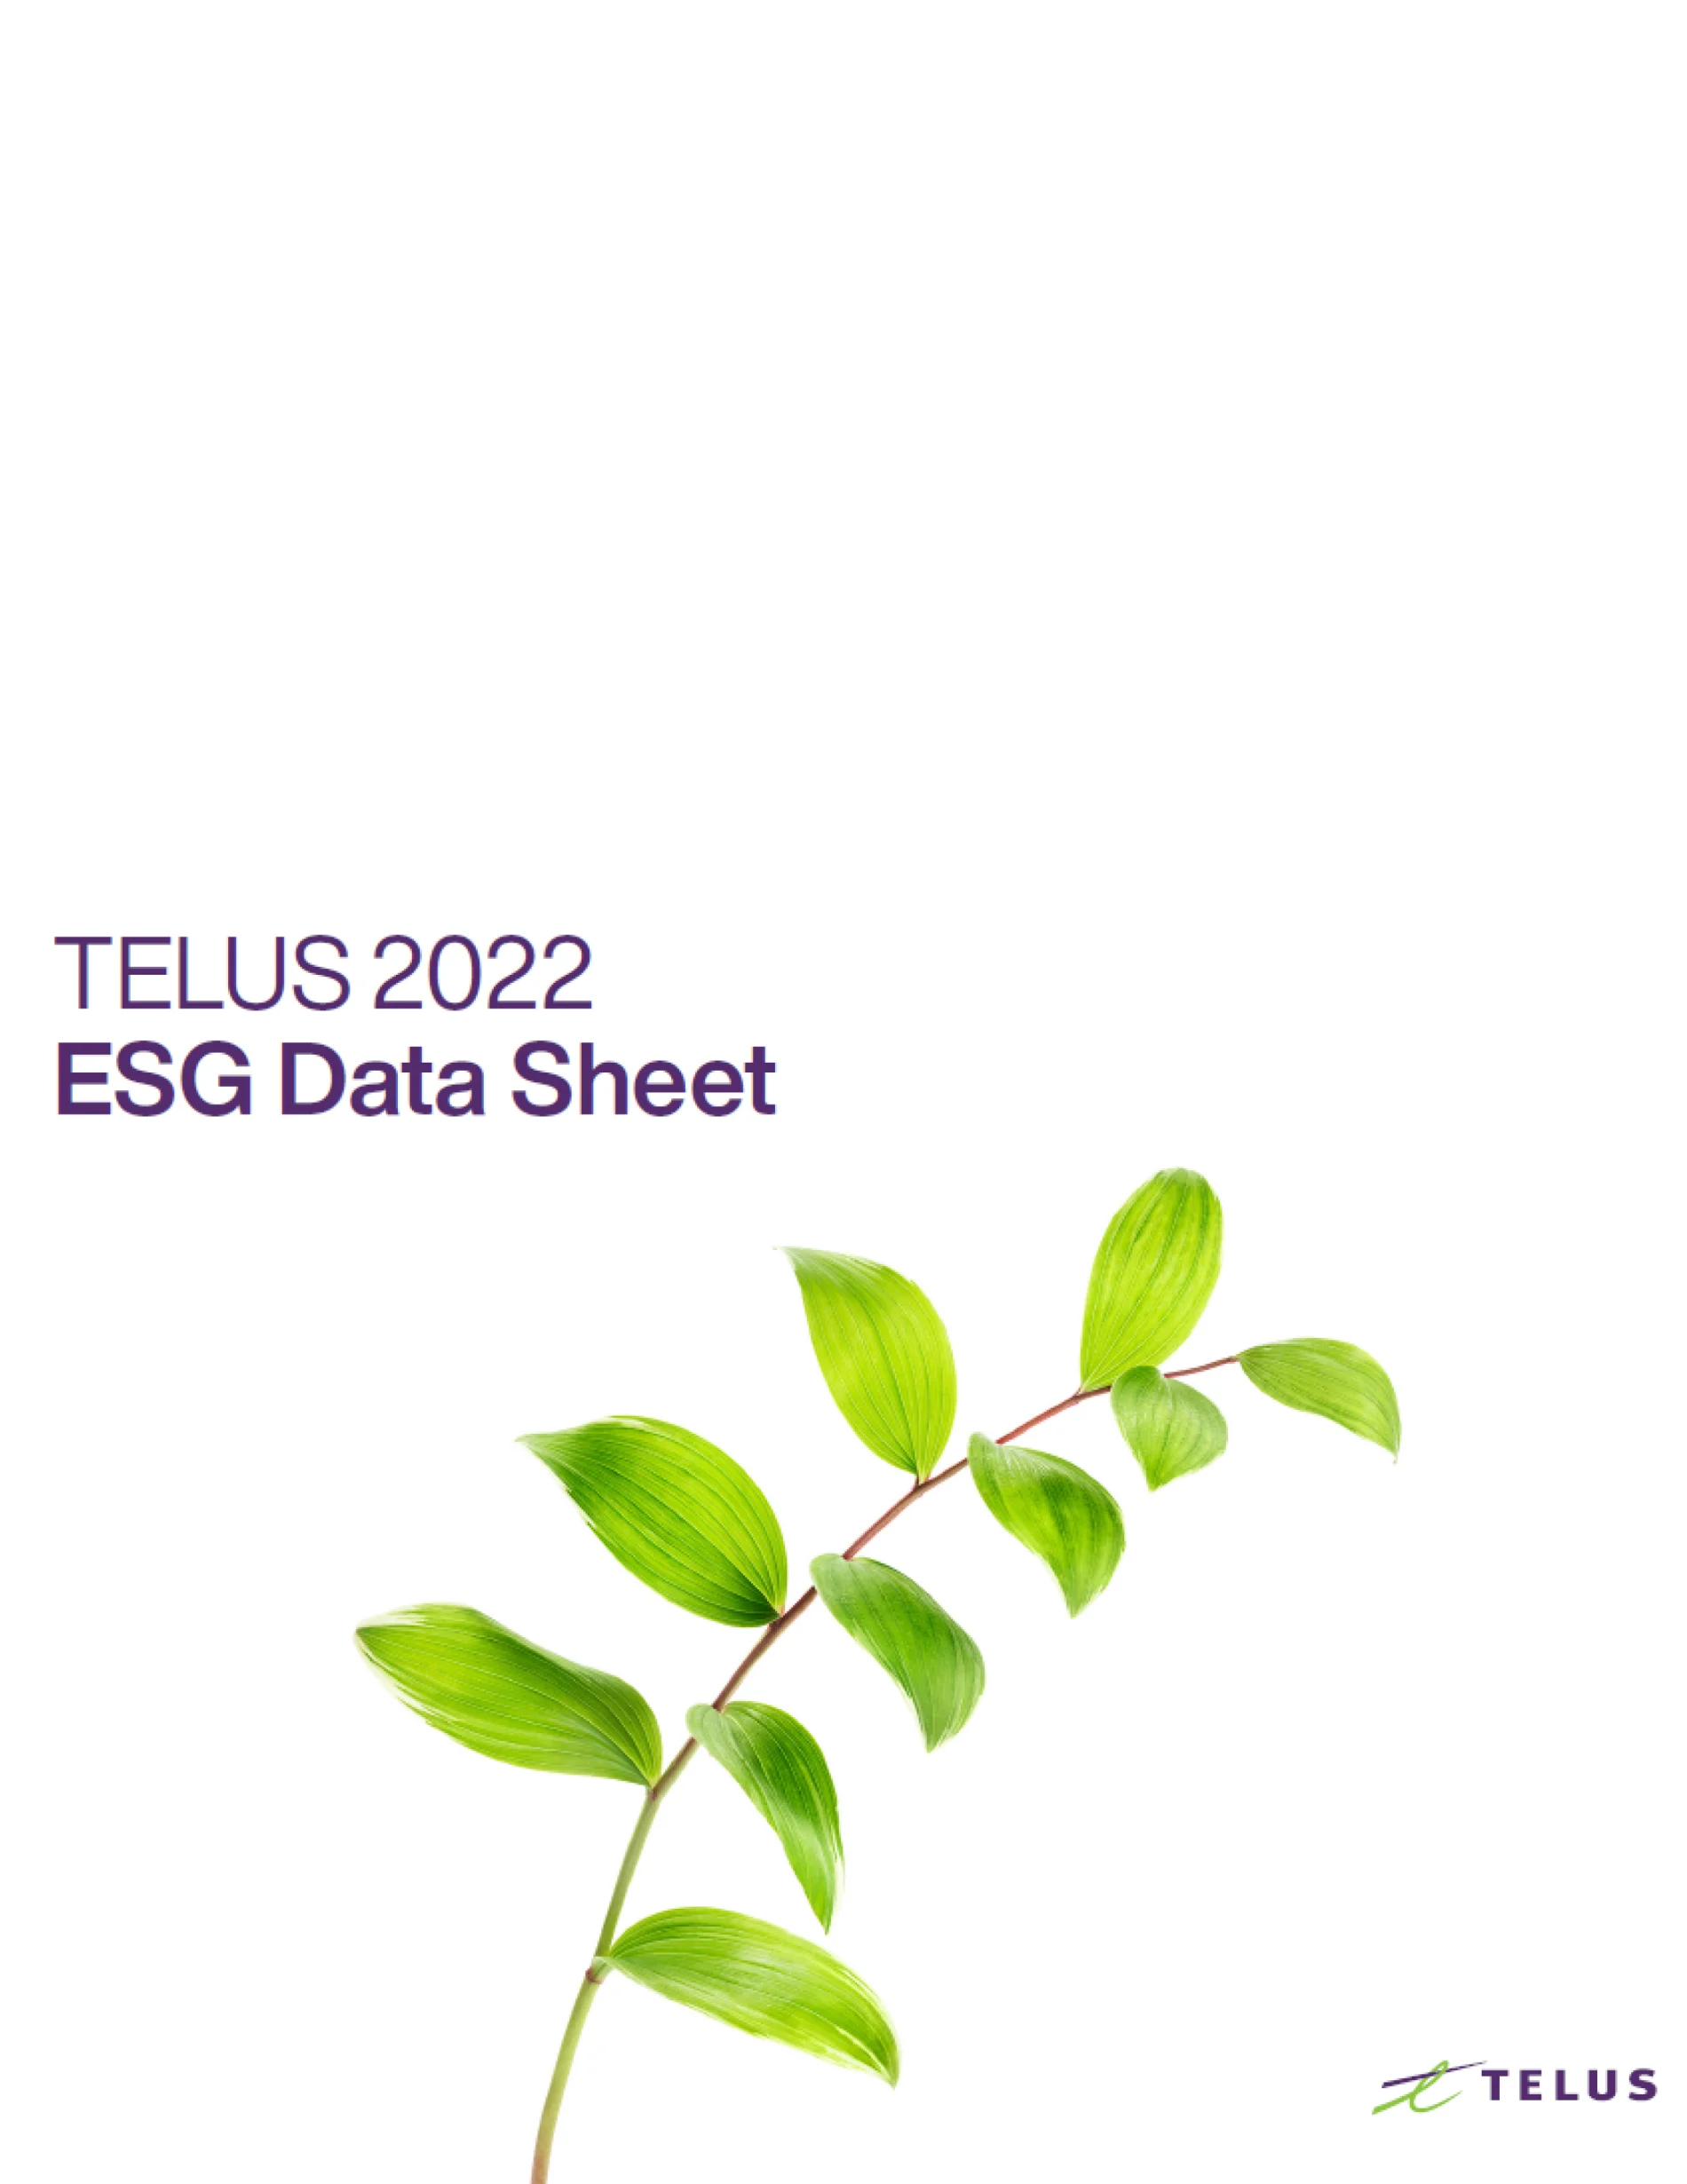 The cover of the 2022 TELUS ESG Data Sheet